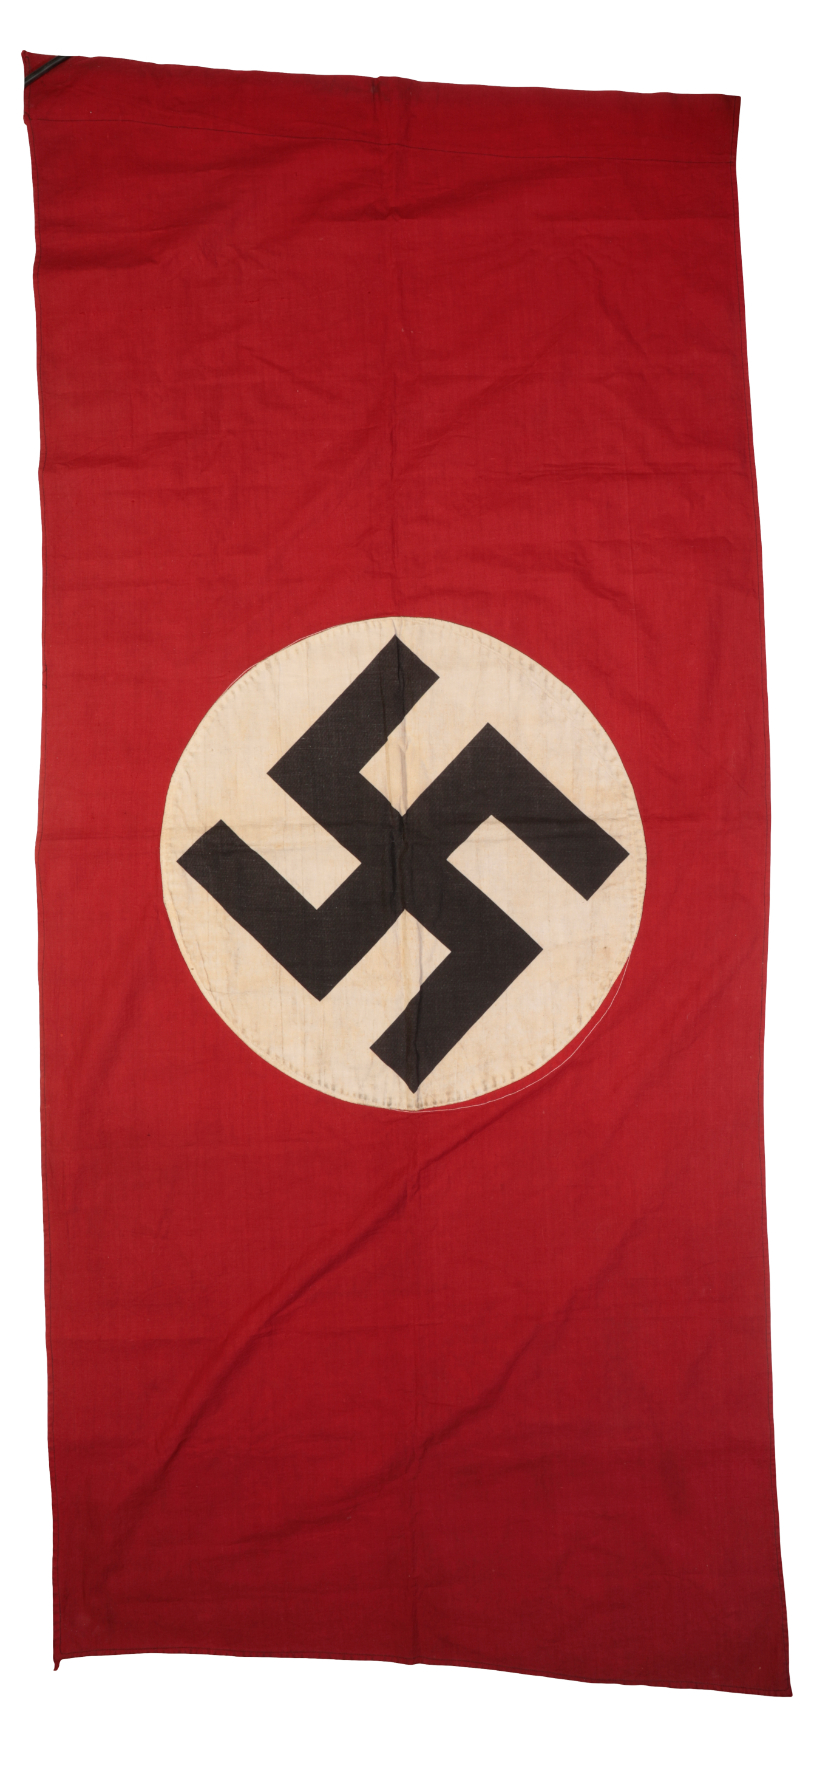 A WWII GERMAN MILITARY CLOTH FLAG circa